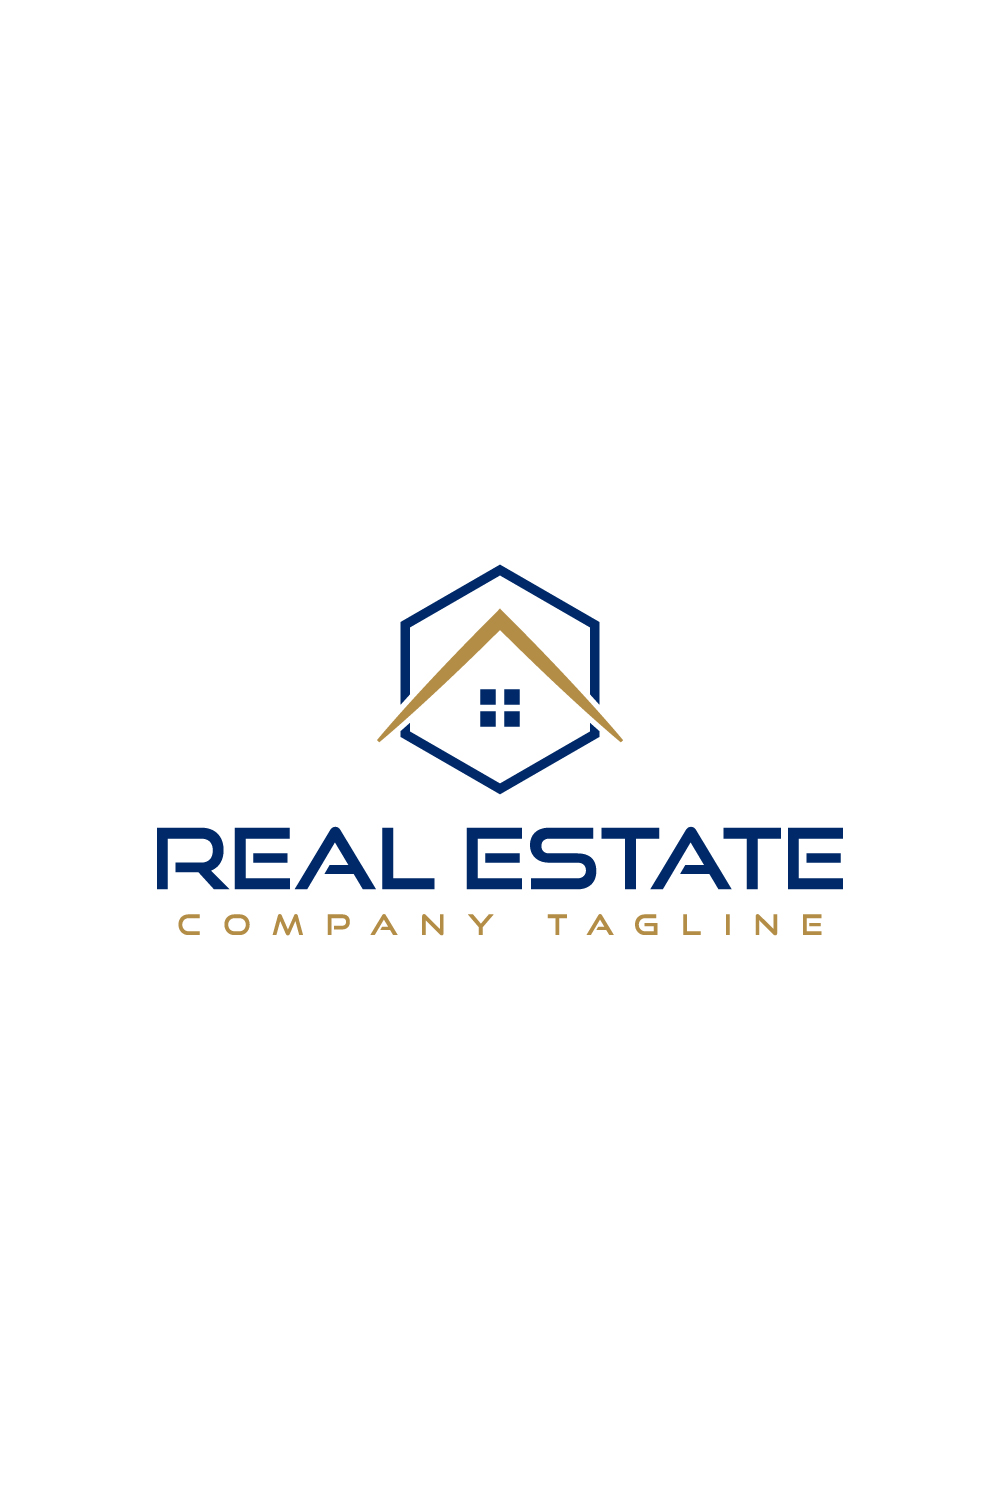 Real estate logo with golden, dark blue color pinterest preview image.